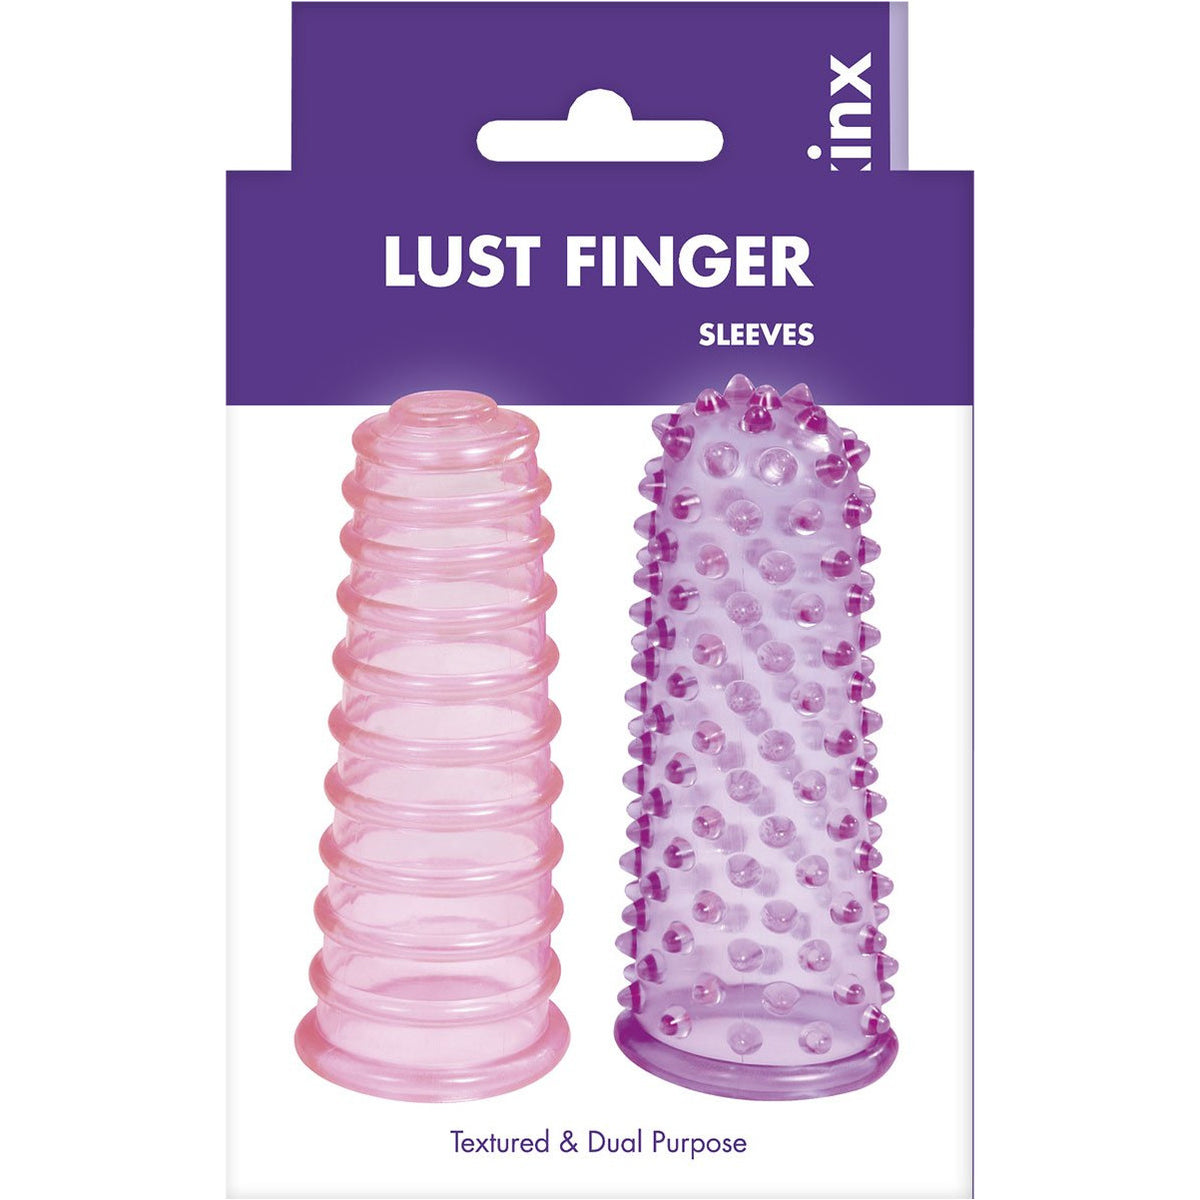 Kinx Lust Finger Sleeves - Pink and Purple